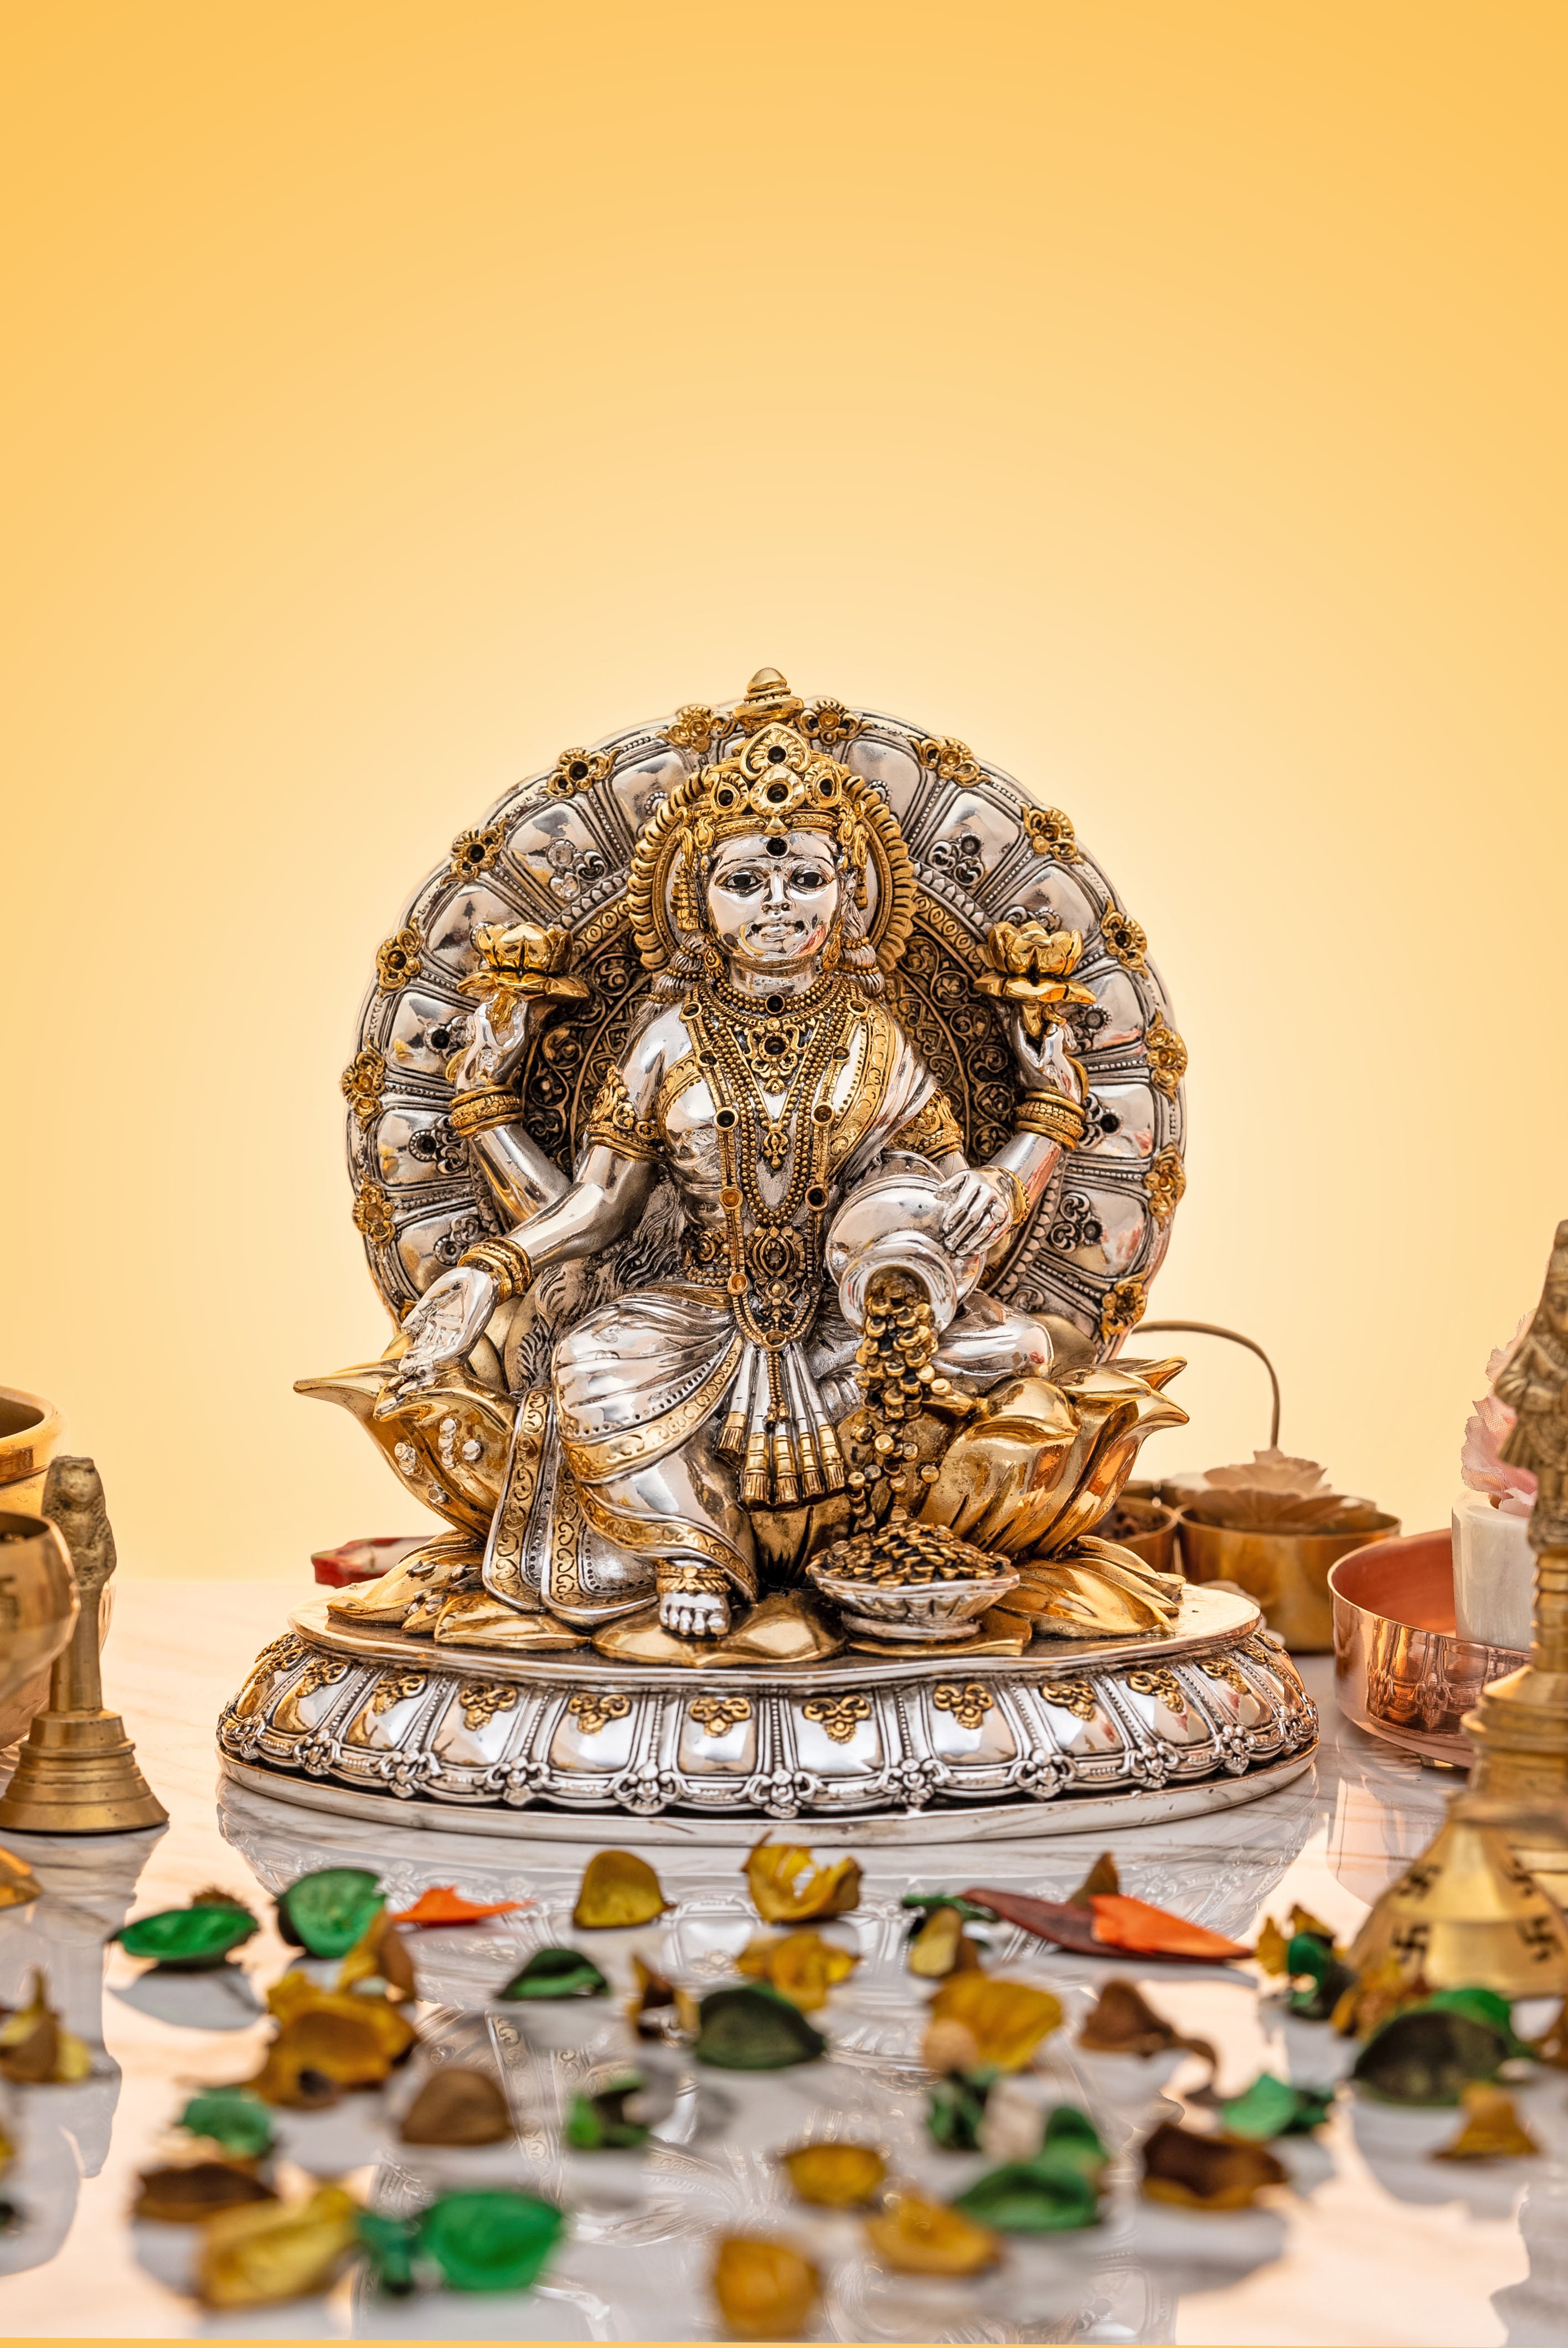 Antique Gold & Silver Coated Ganesha Lakshmi Pair